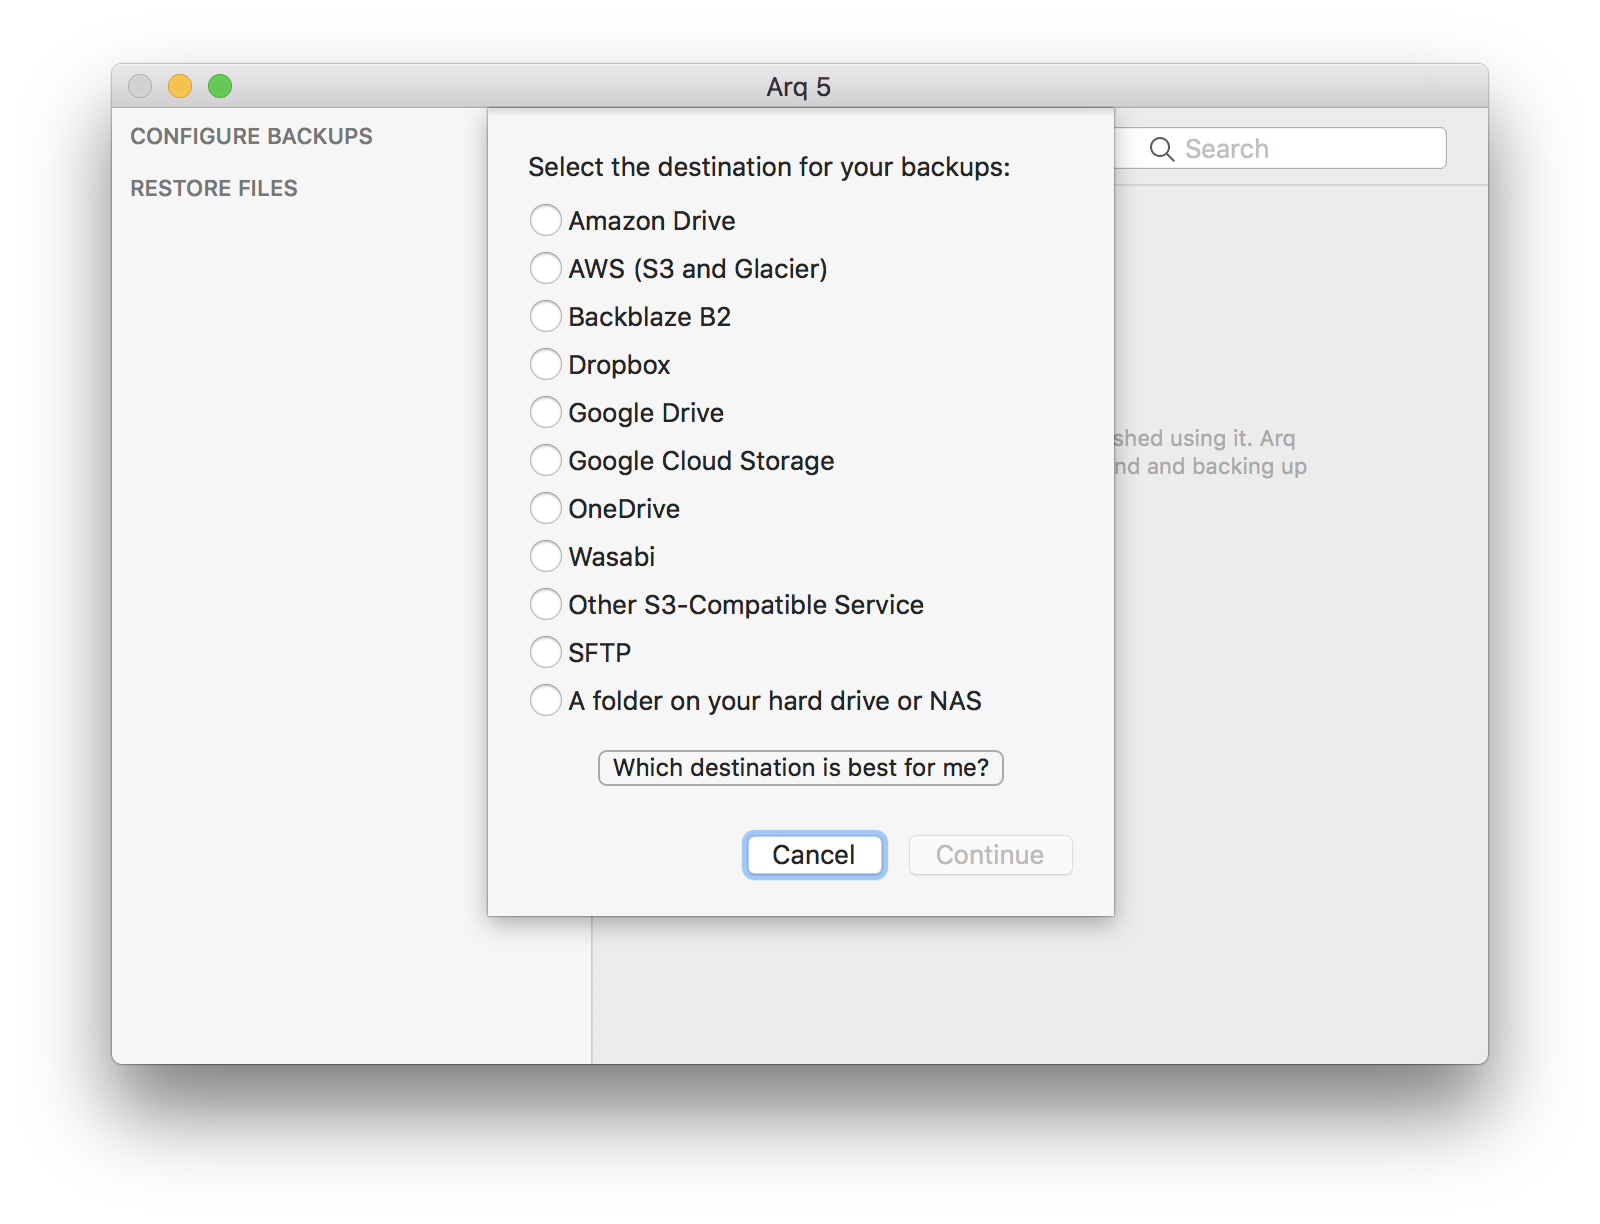 how do i get dropbox on mac to open cloud folder